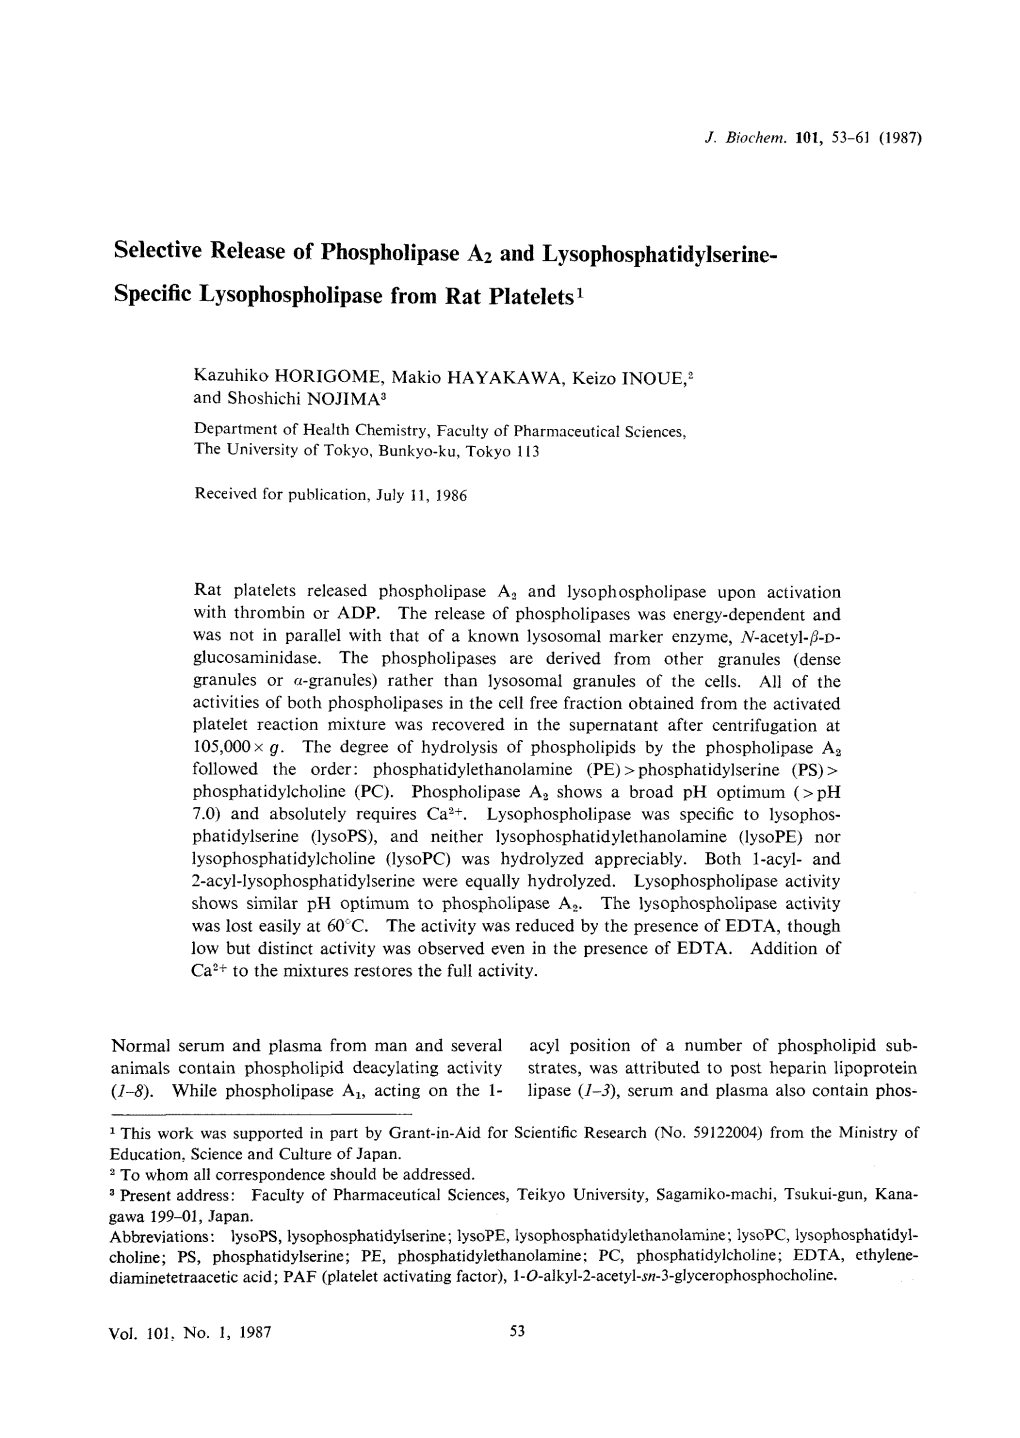 Selective Release of Phospholipase A2 and Lysophosphatidylserine